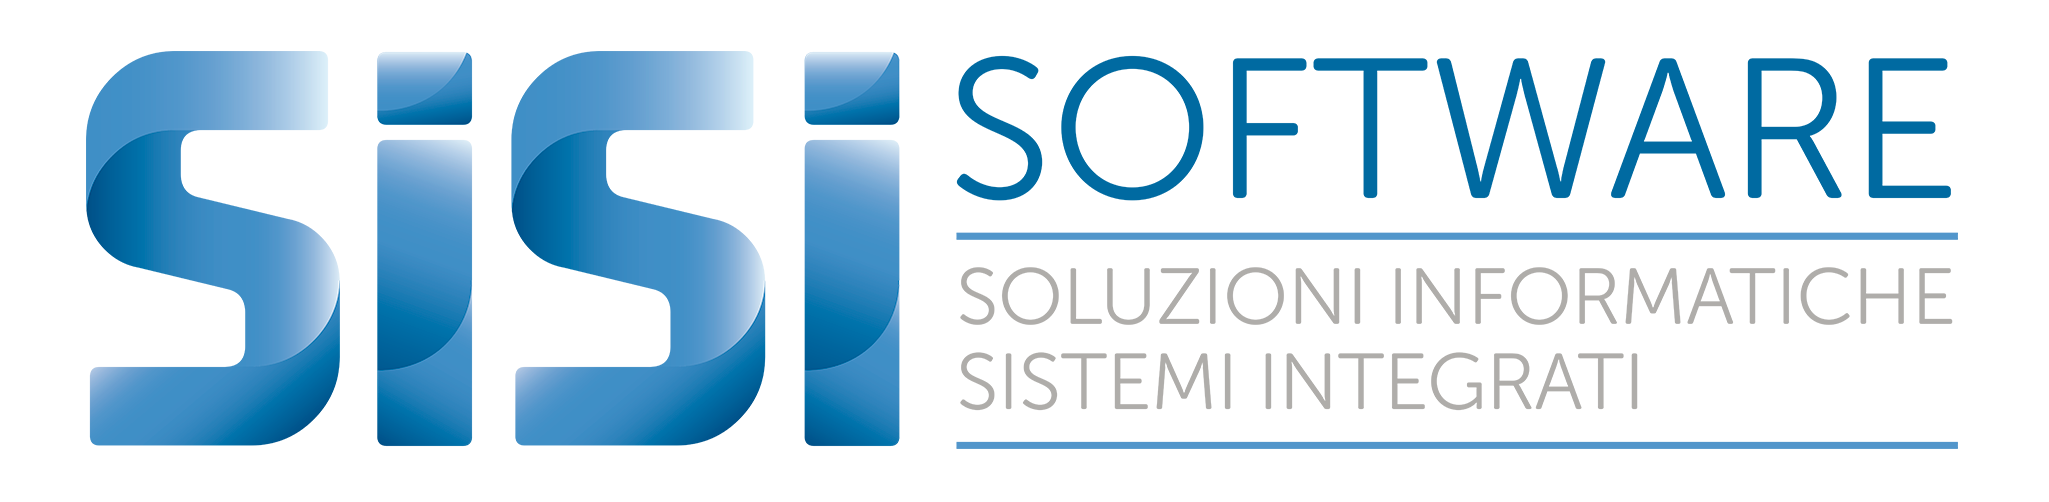 SISI Software - Vendite Online